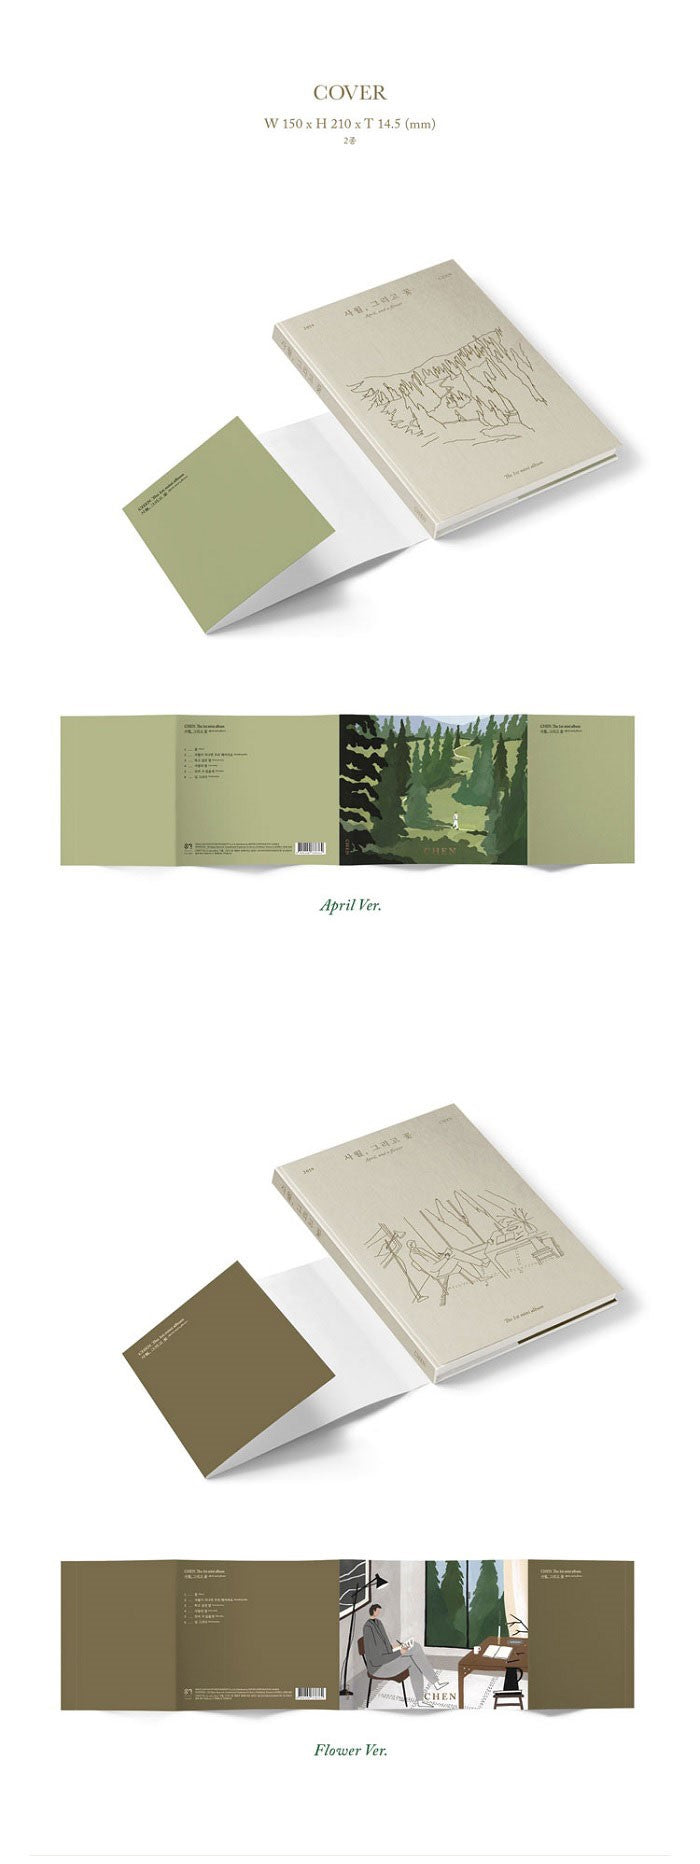 CHEN (EXO) Mini Album Vol. 1 - April, and a flower (Random Ver.)